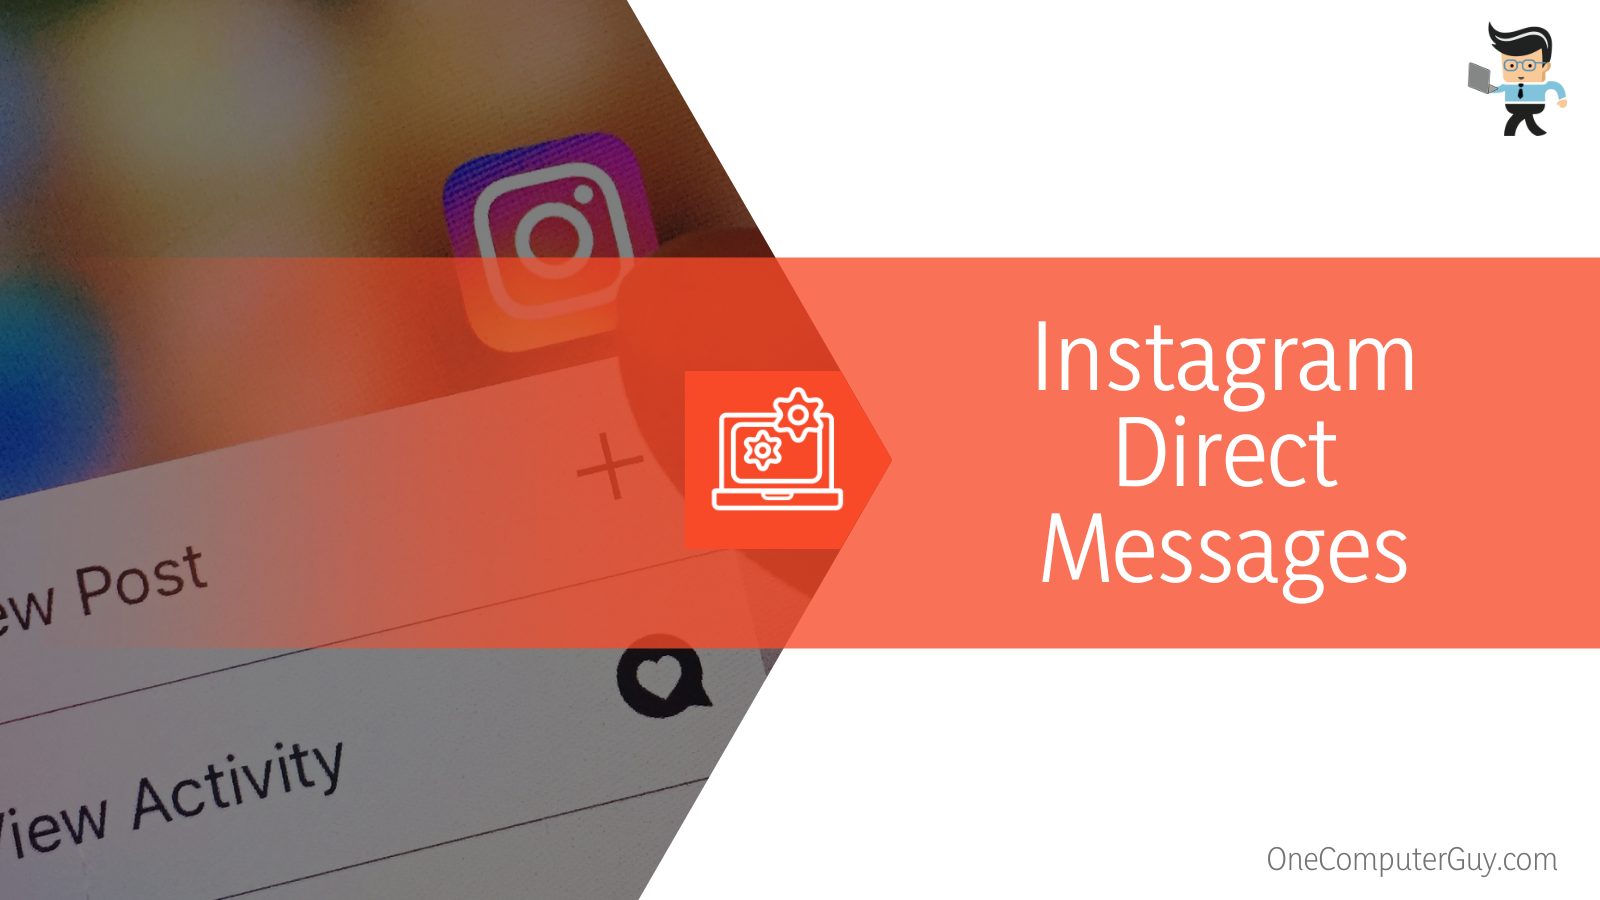 Instagram Direct Messages